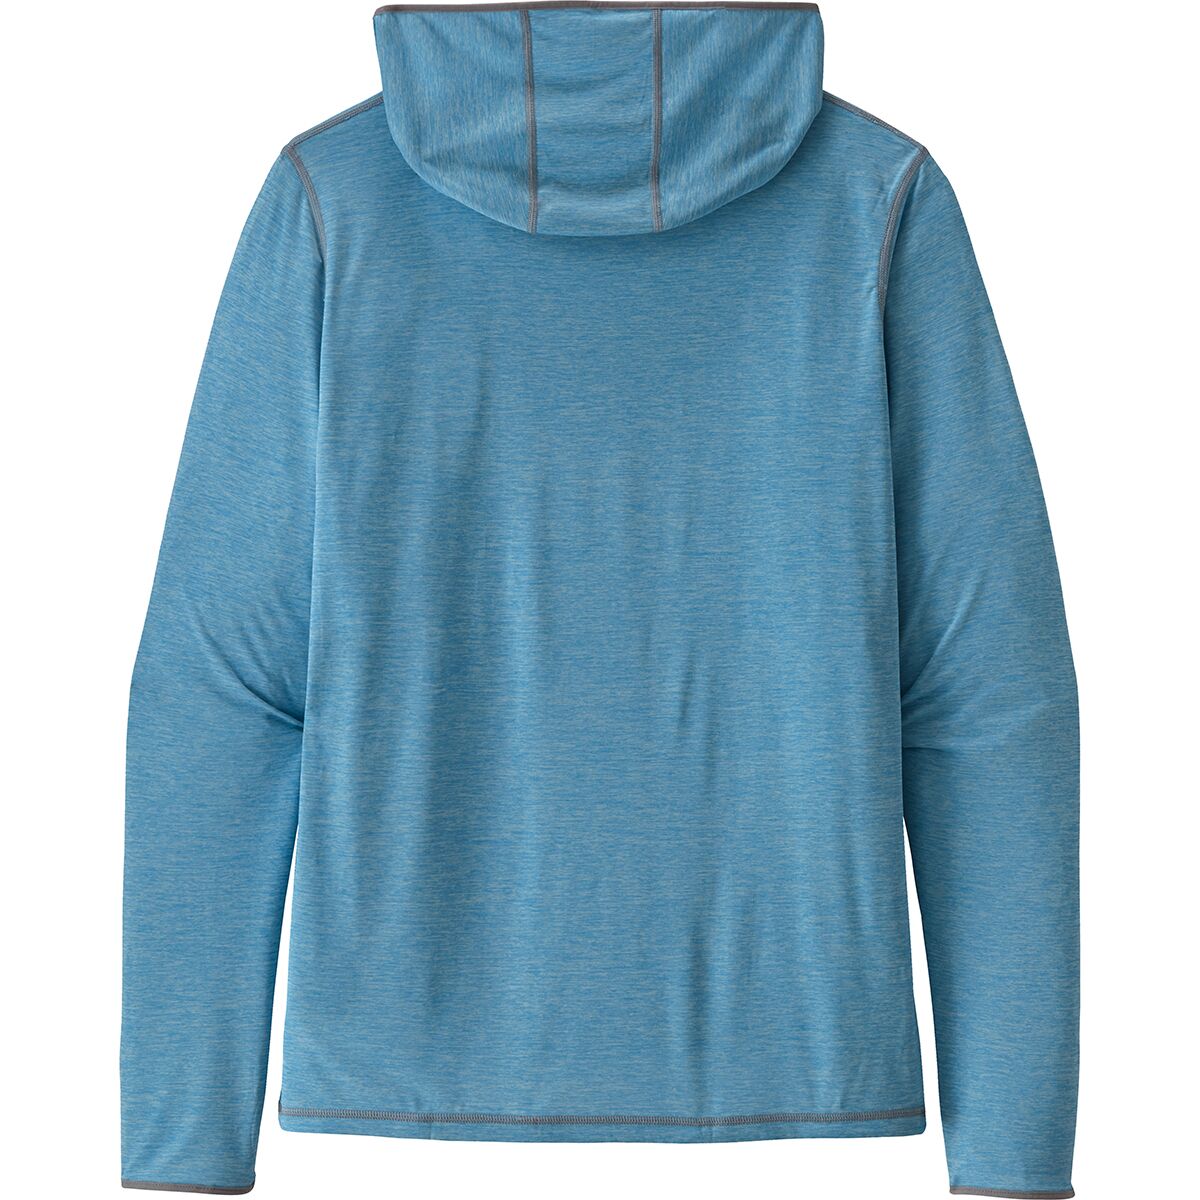 PATAGONIA TROPIC COMFORT II Hoody Mens XL Blue Pullover Hike Shade Layer  Sun UPF $39.95 - PicClick